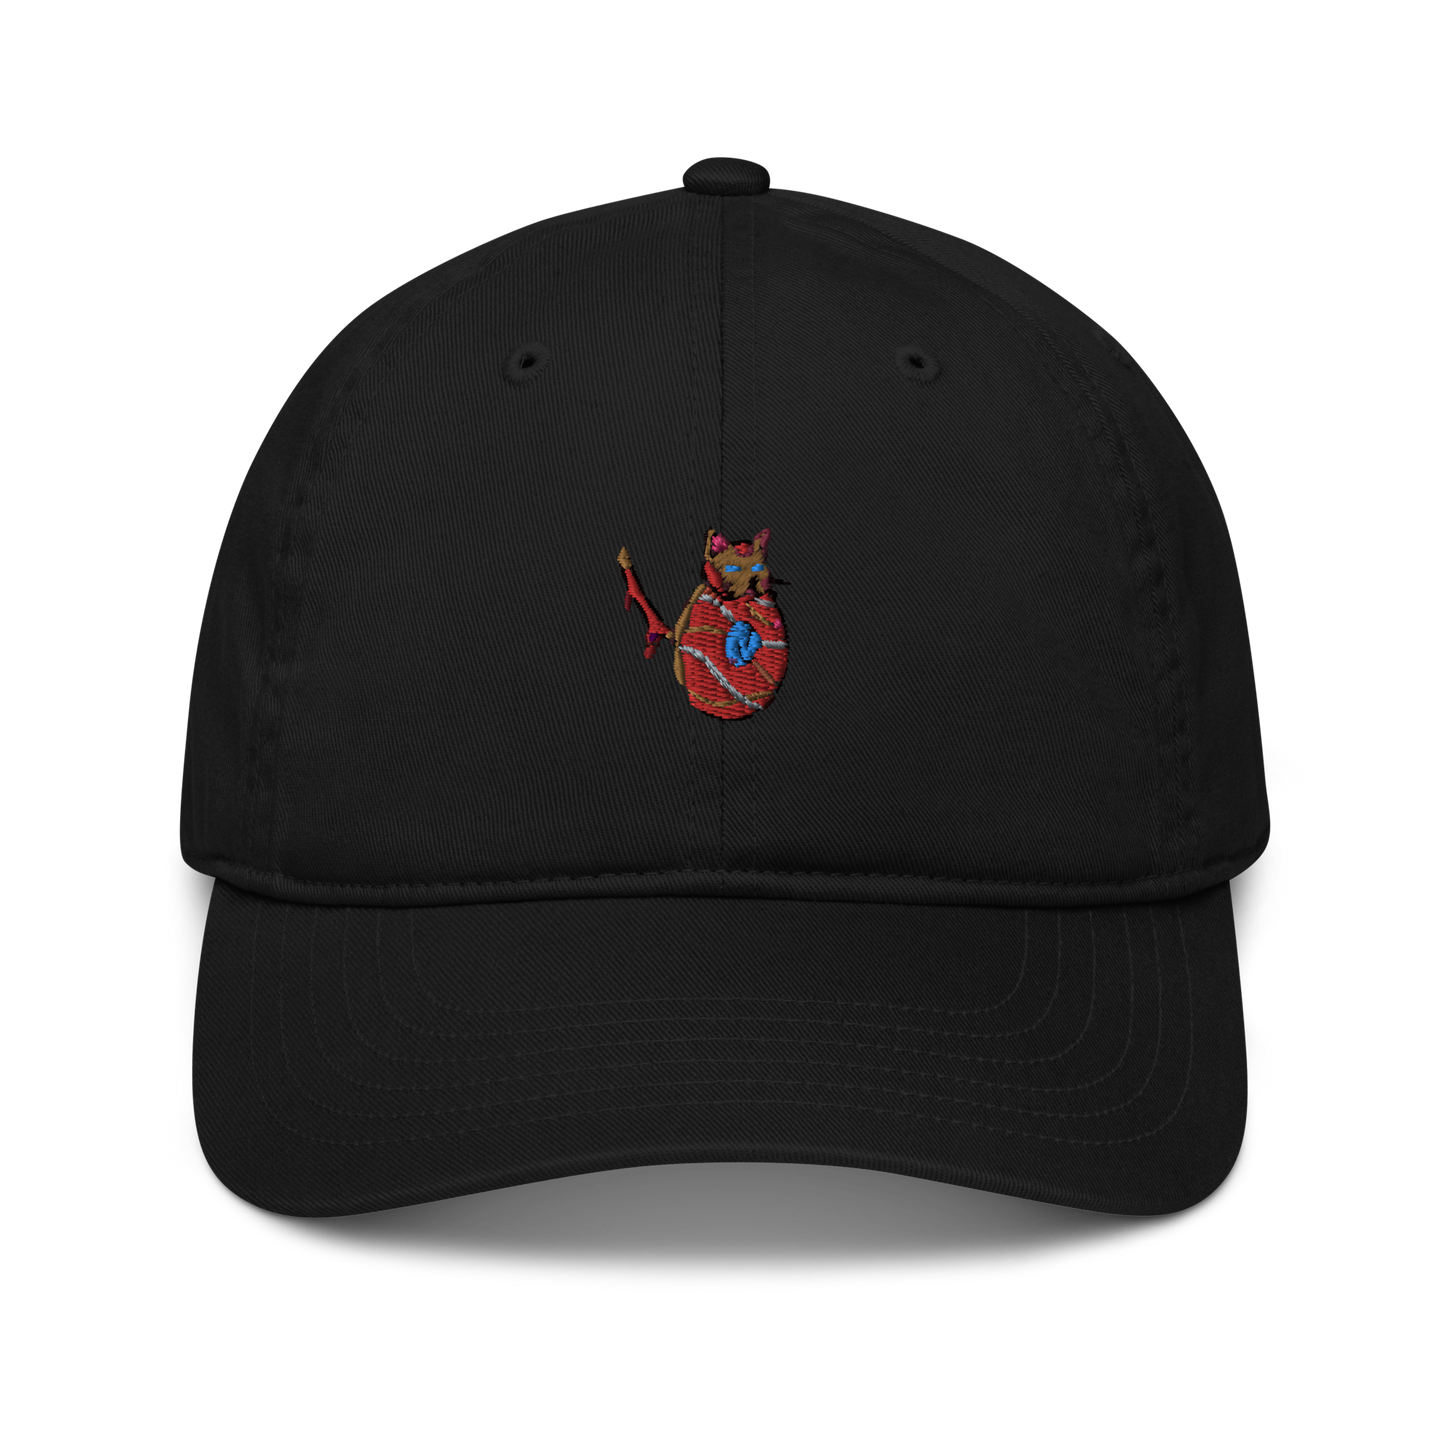 feat cr.em.y - Organic dad hat (embroidered)